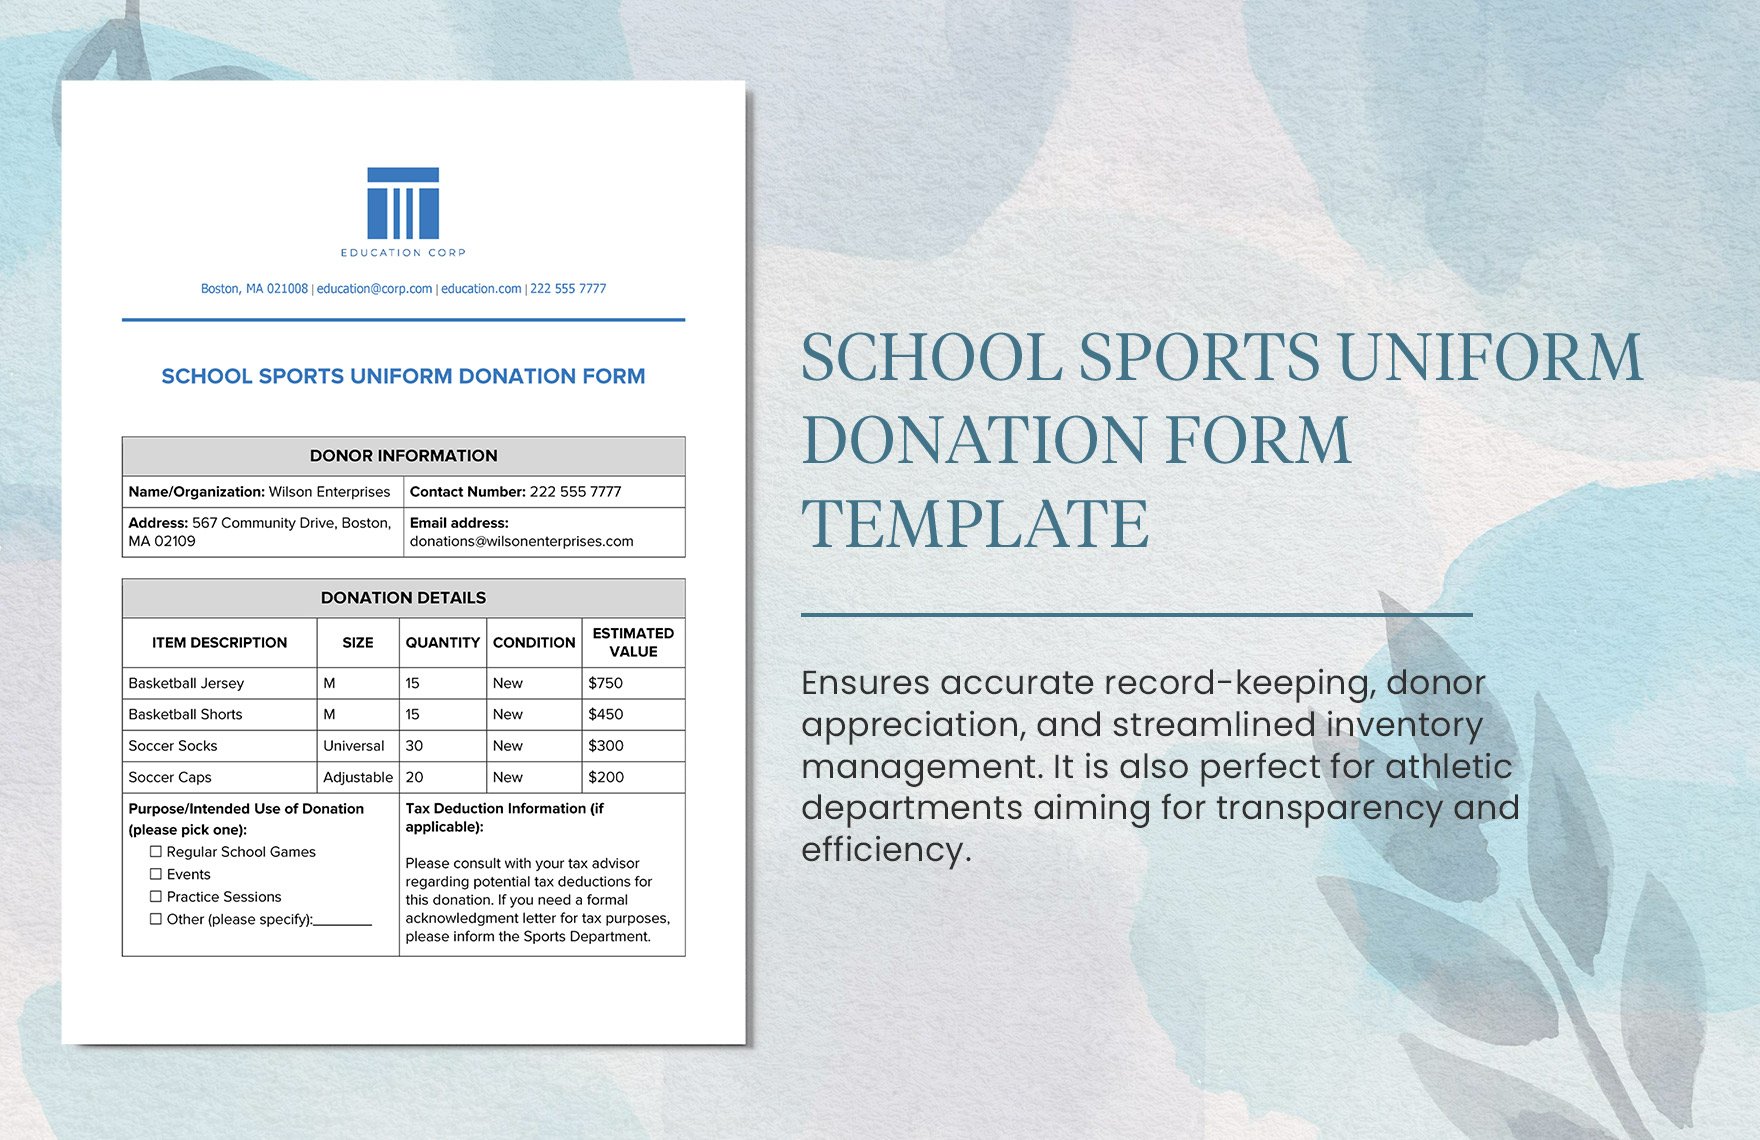 School Sports Uniform Donation Form Template in Word, Google Docs, PDF